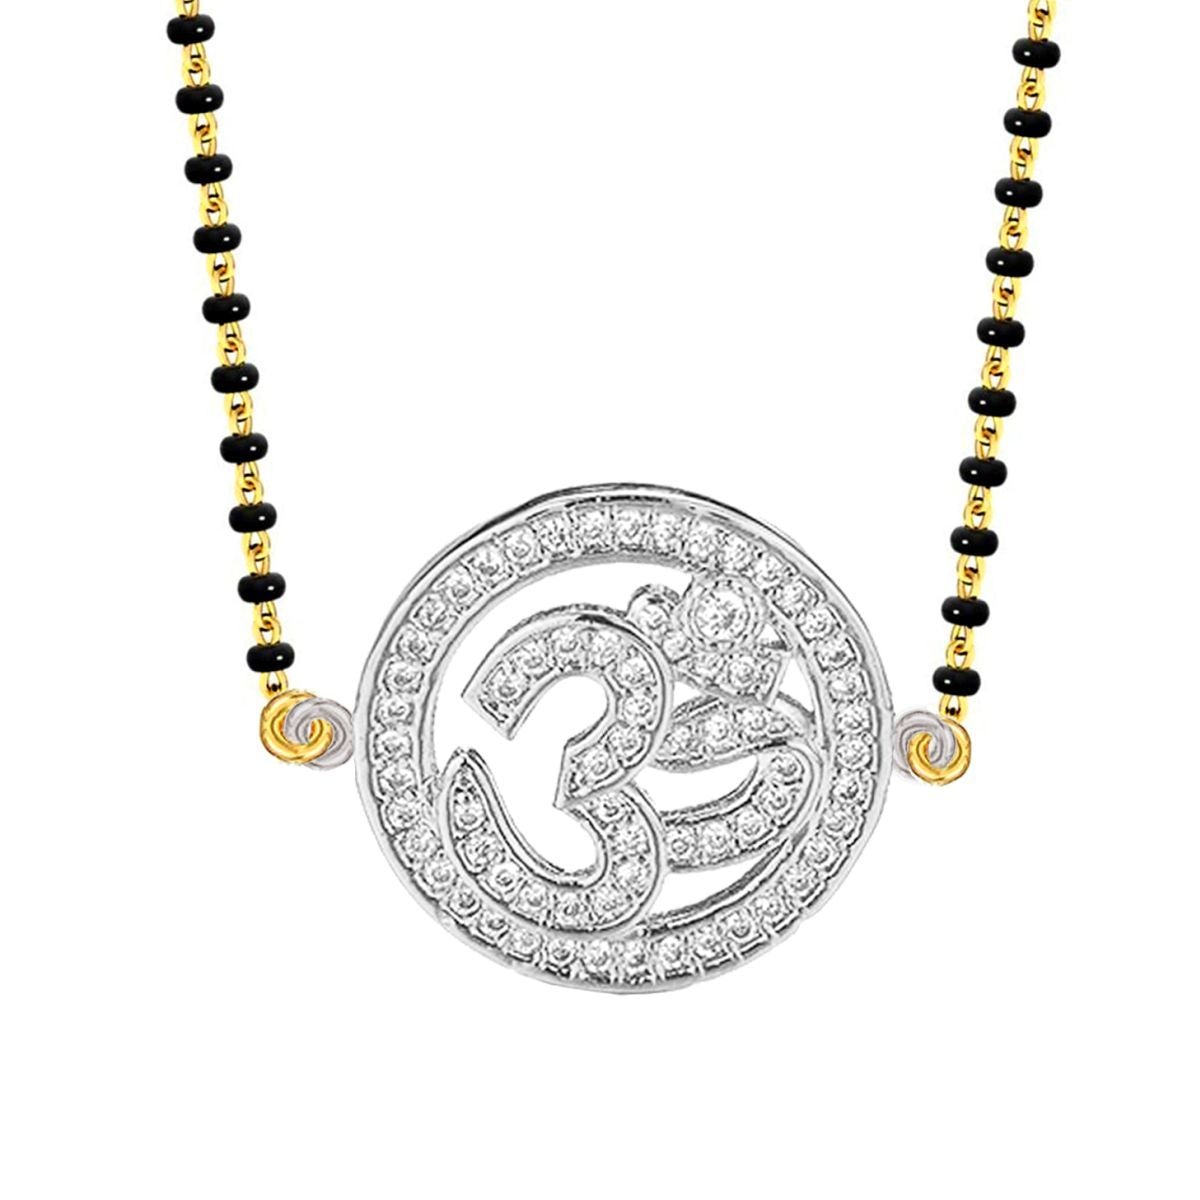 Aum Om Silver Cz Adjustable Mangalsutra Chain Necklace